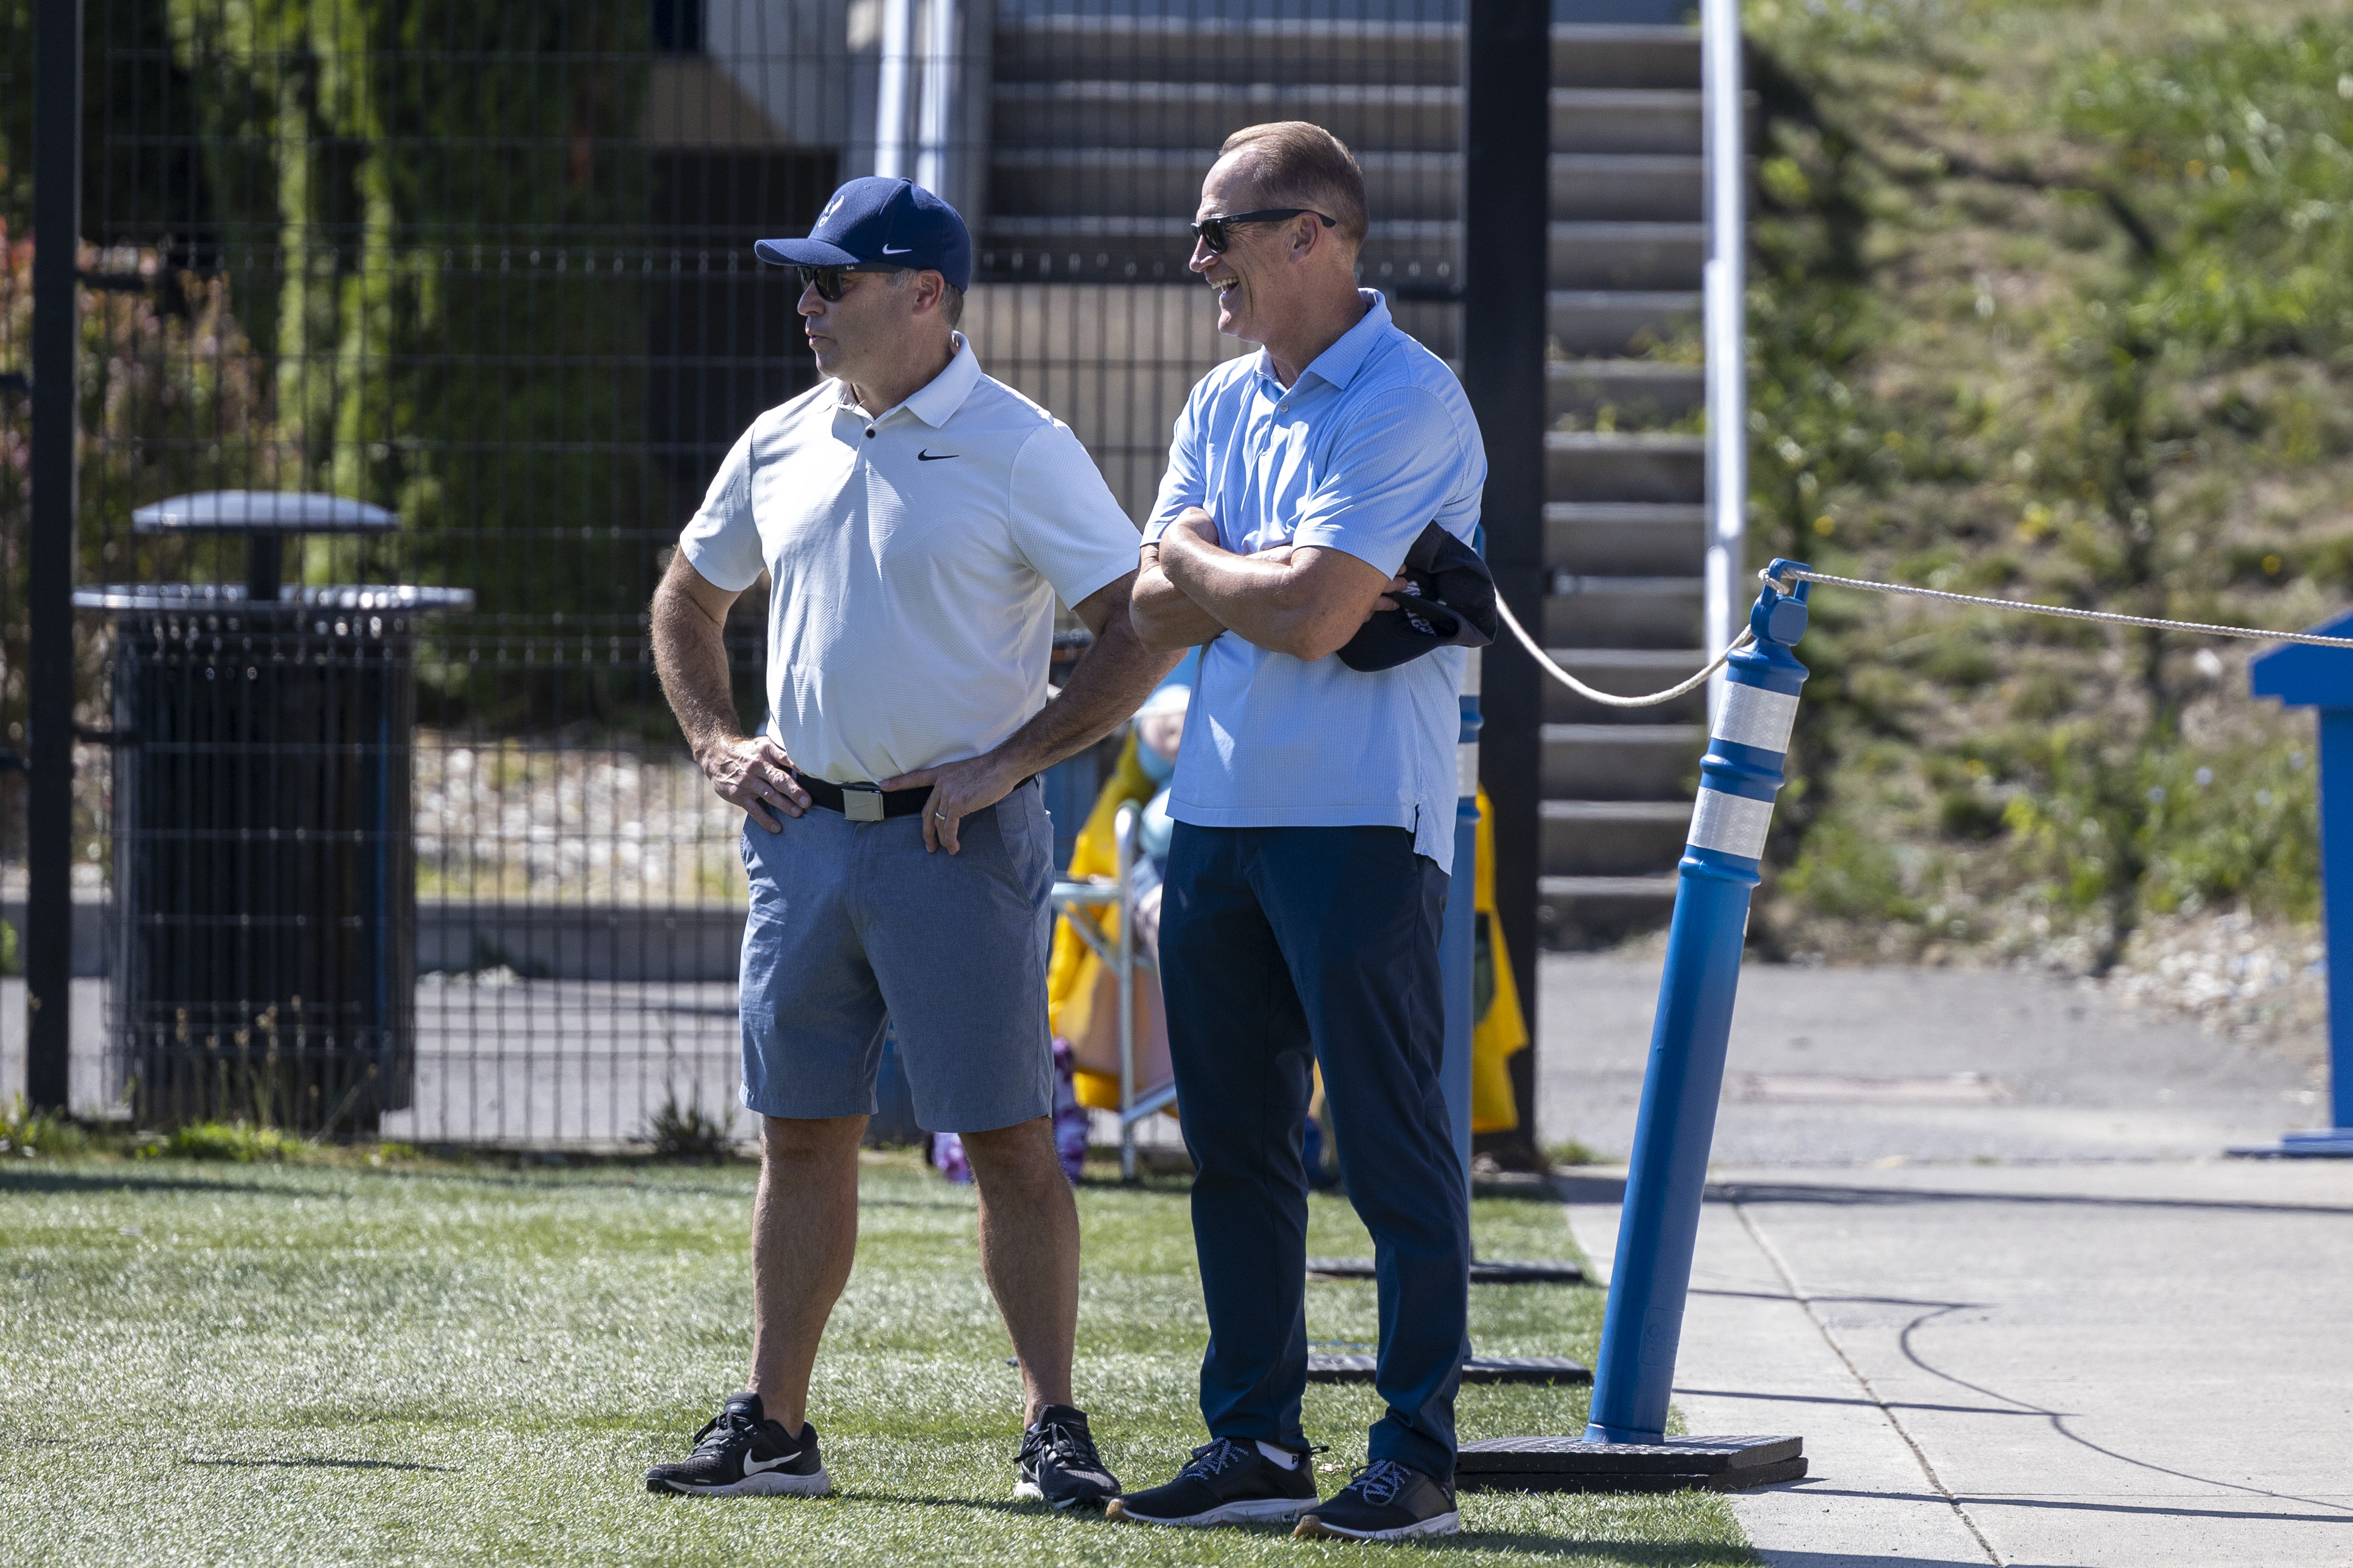 Sterk chats with Steve Brummel on the edge of a soccer field